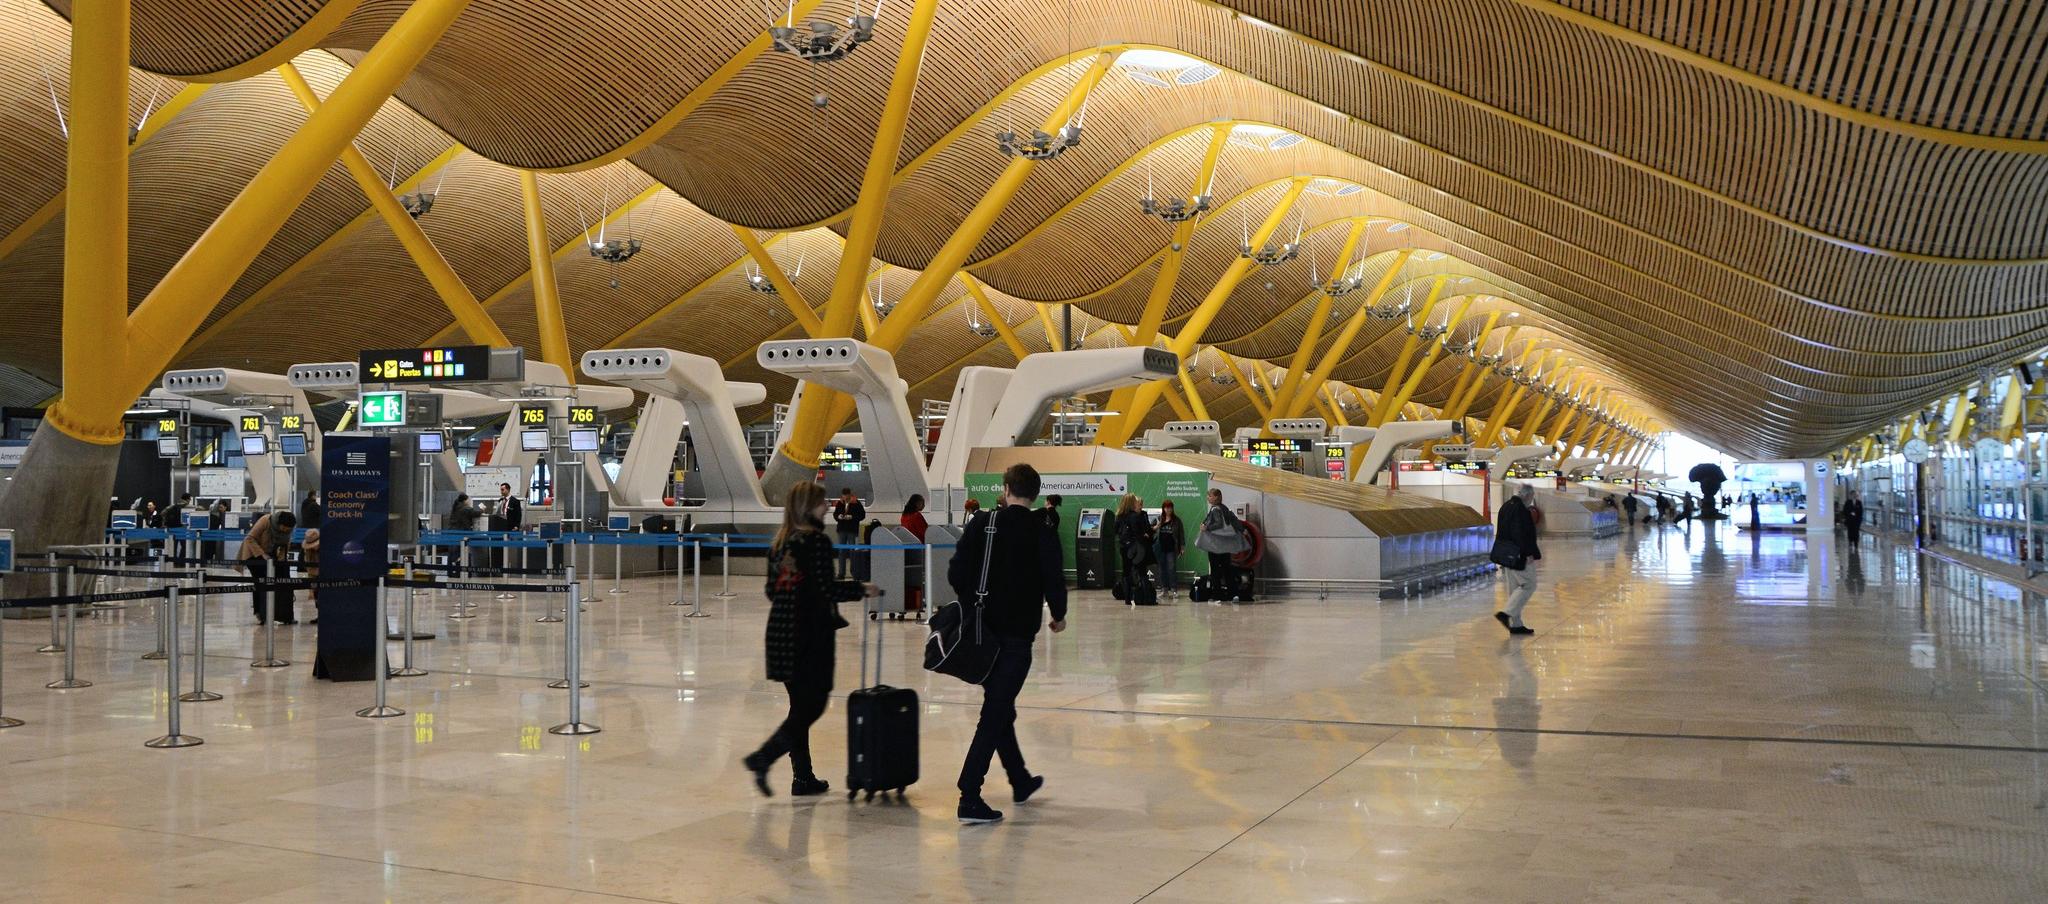 Aeropuerto Adolfo Suárez #Madrid-#Barajas ✈️.